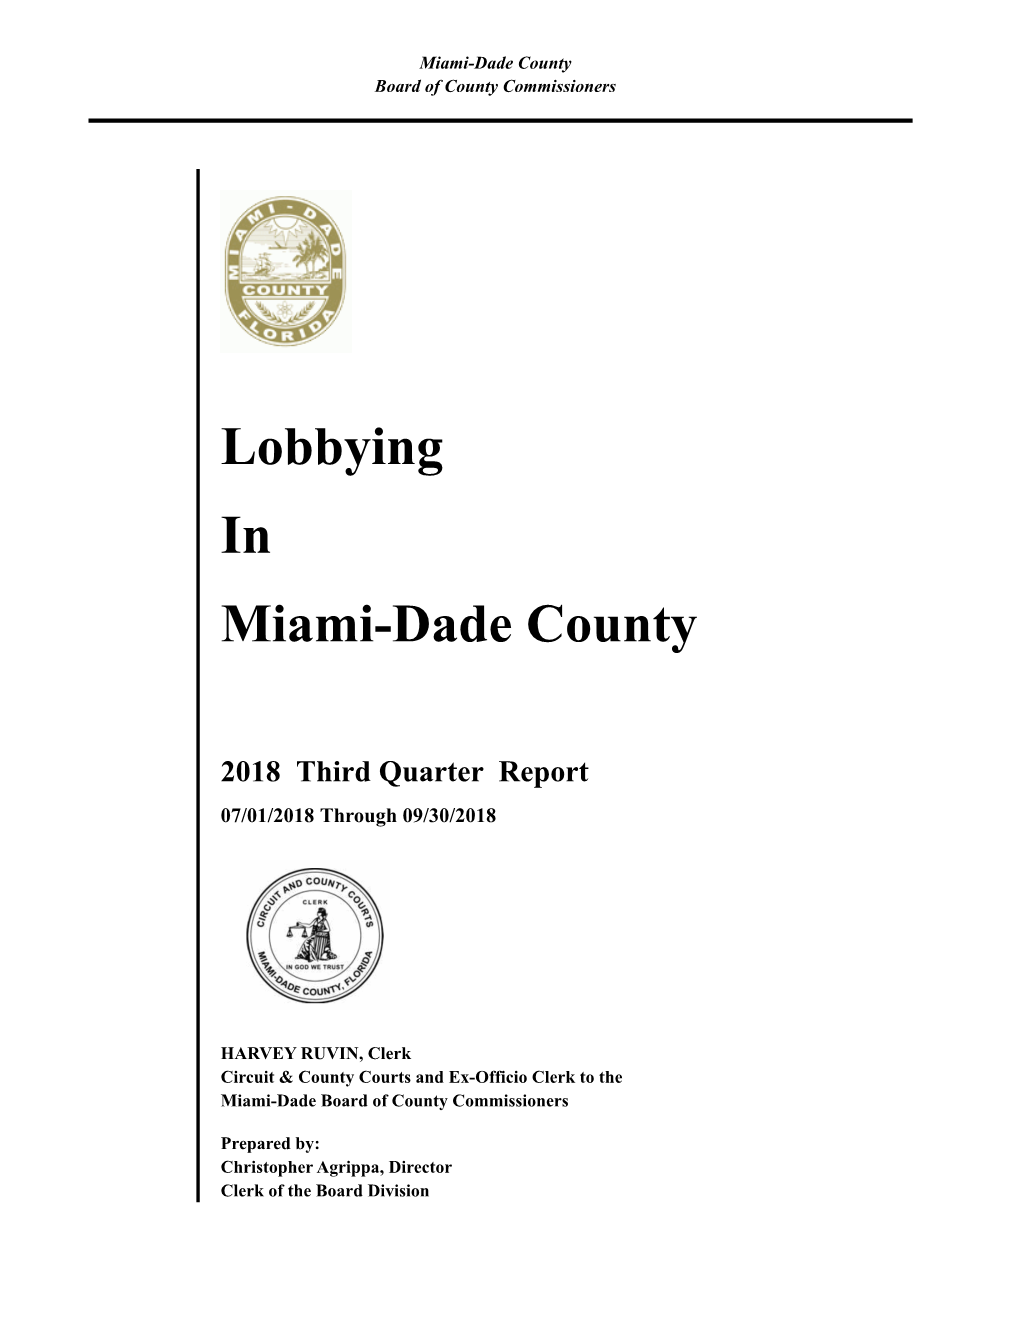 Lobbying in Miami-Dade County